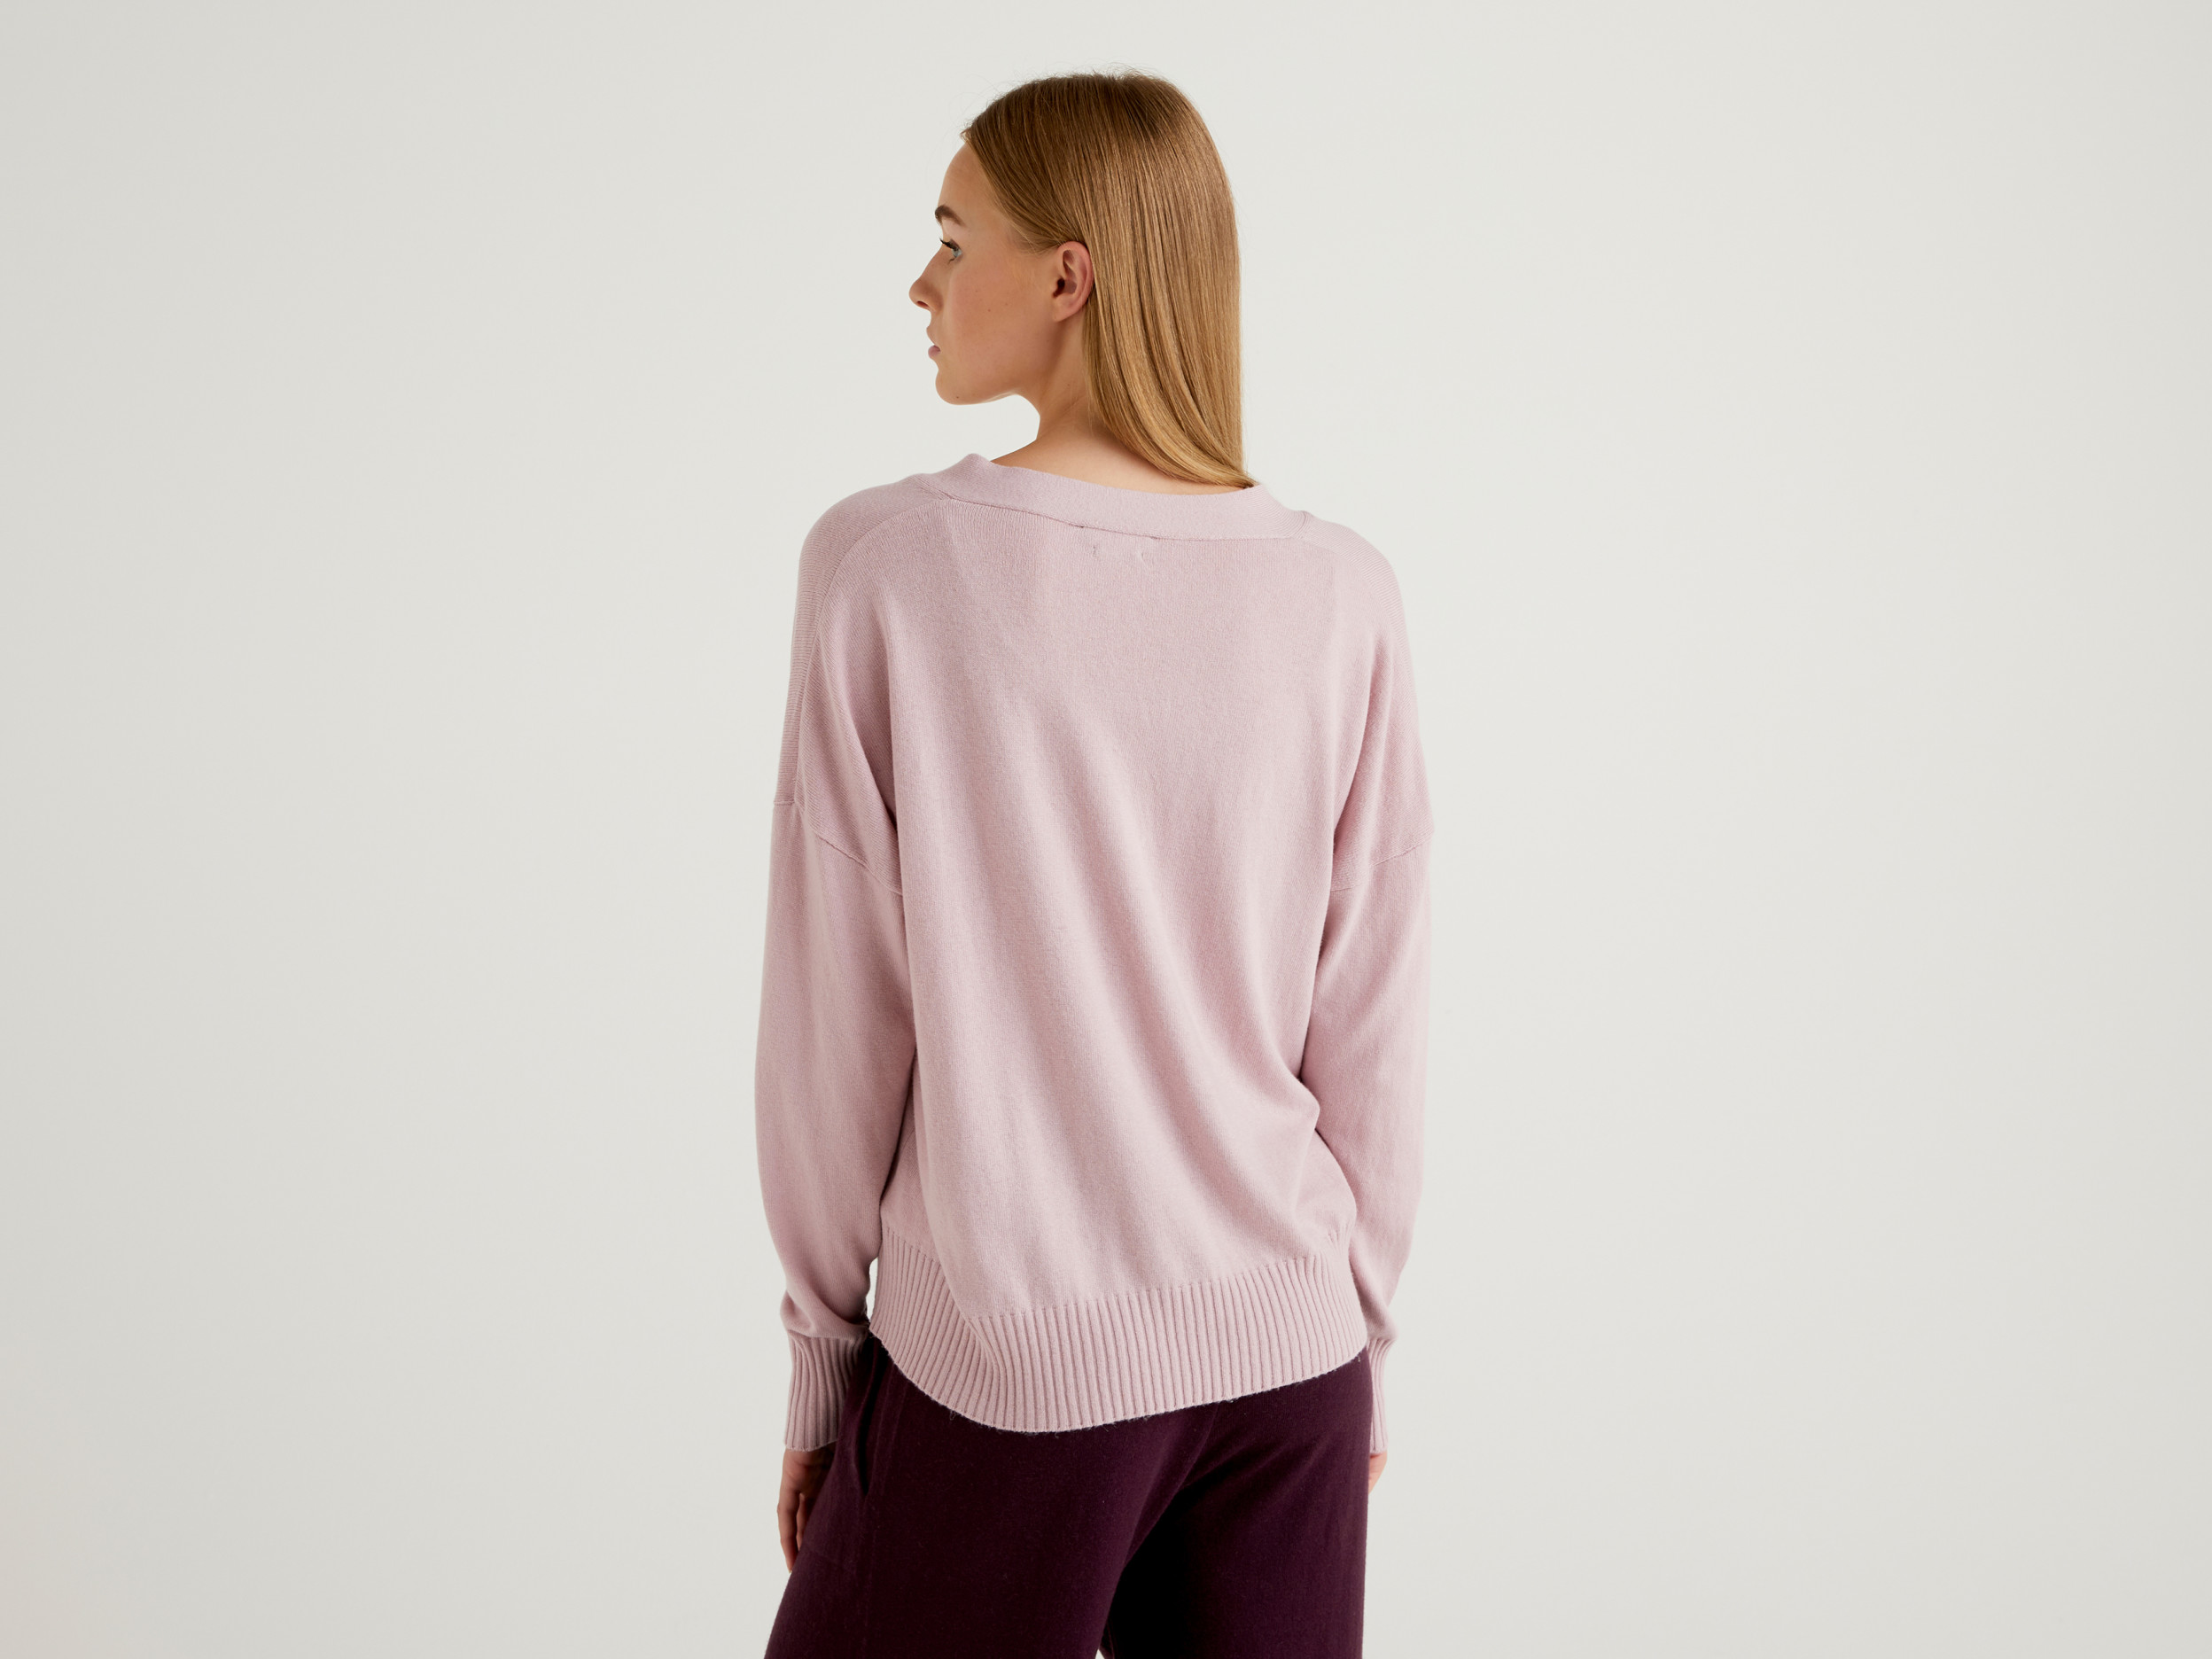 Benetton, V-Neck Sweater In Silk And Cashmere Blend, Taglia M-L, Soft Pink, Women